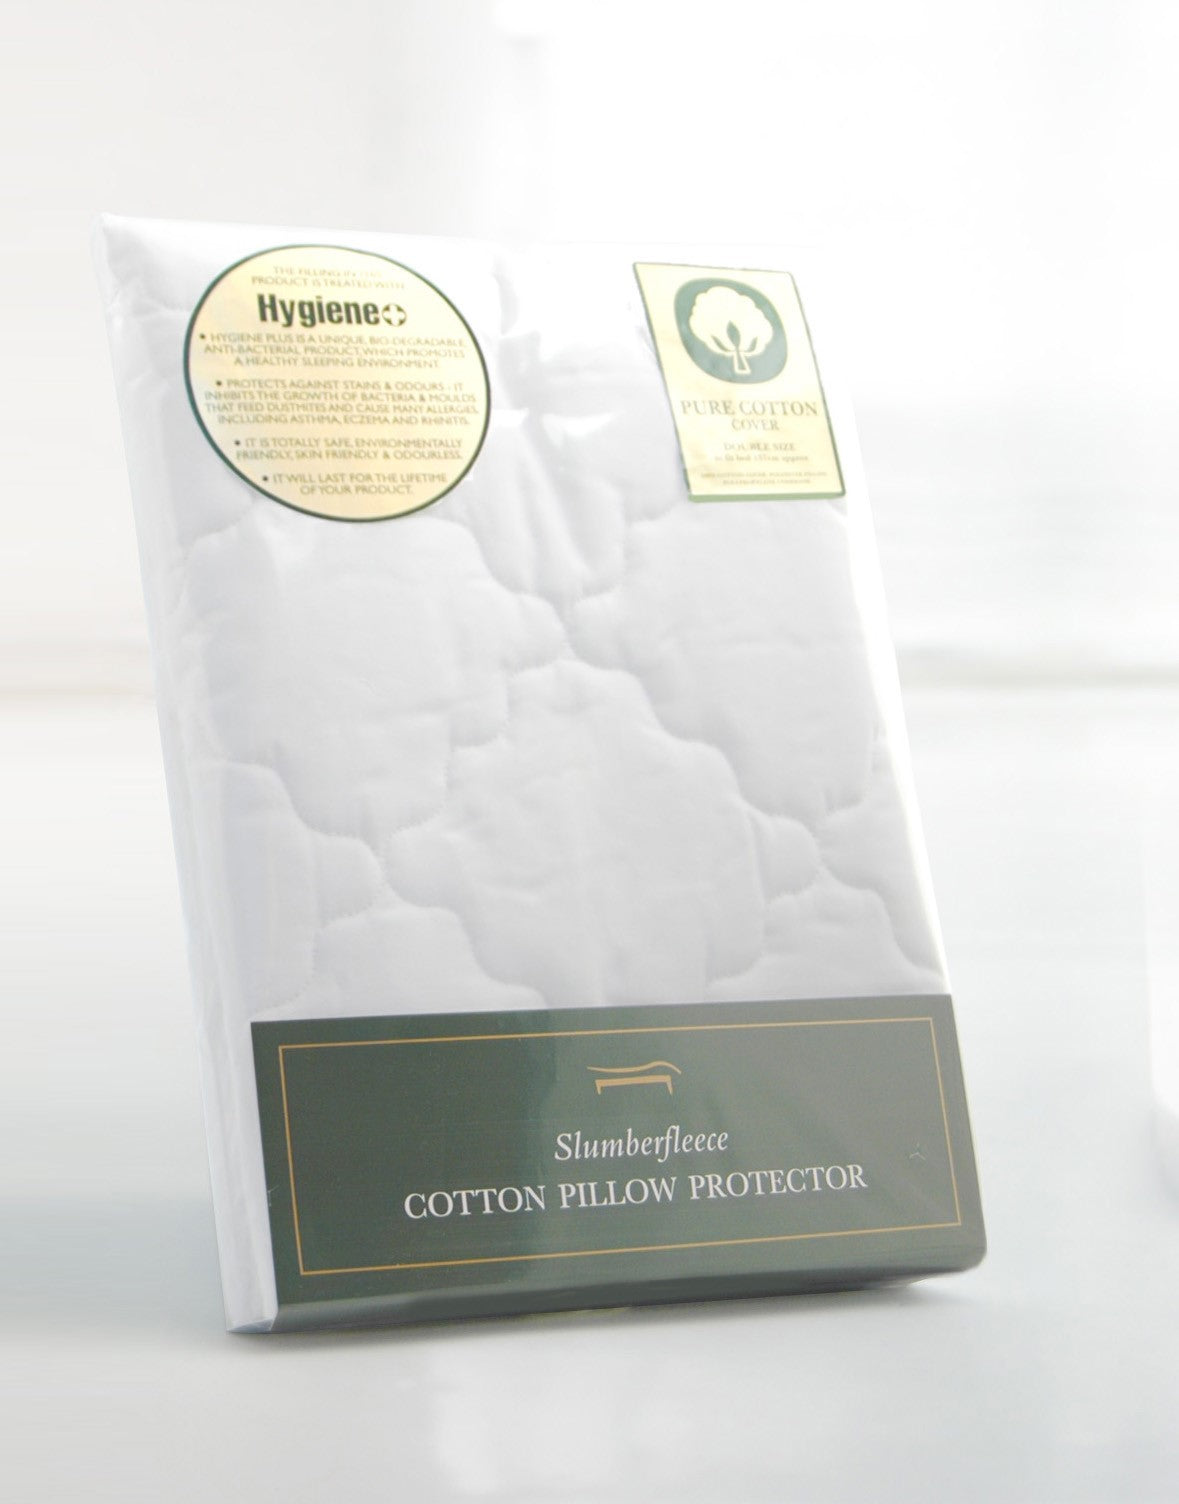 Slumberfleece Pillow Protector Pair Cotton Cover Hygiene Plus.